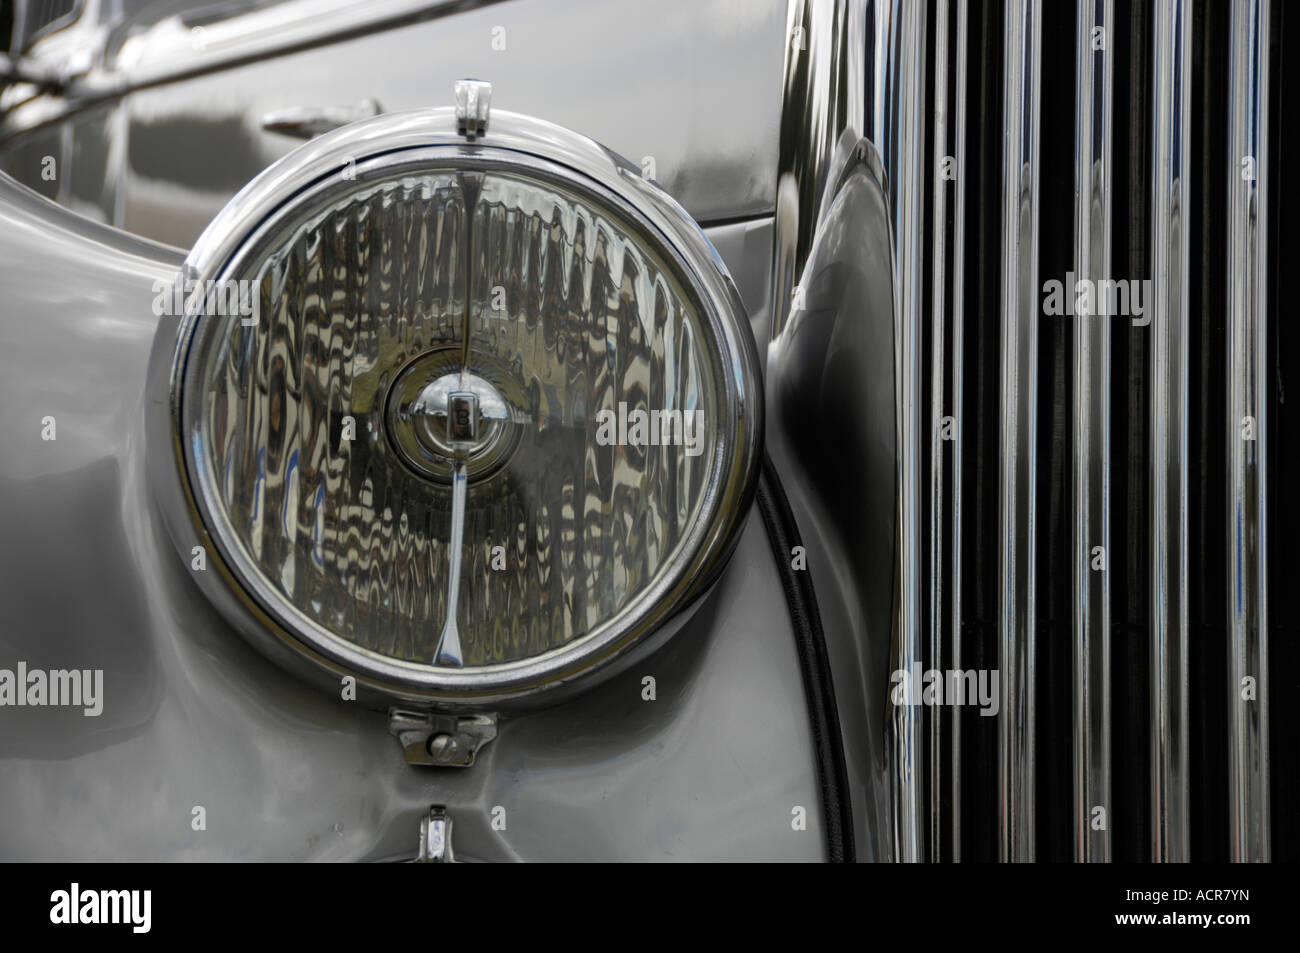 Rolls Royce vintage car detail Stock Photo